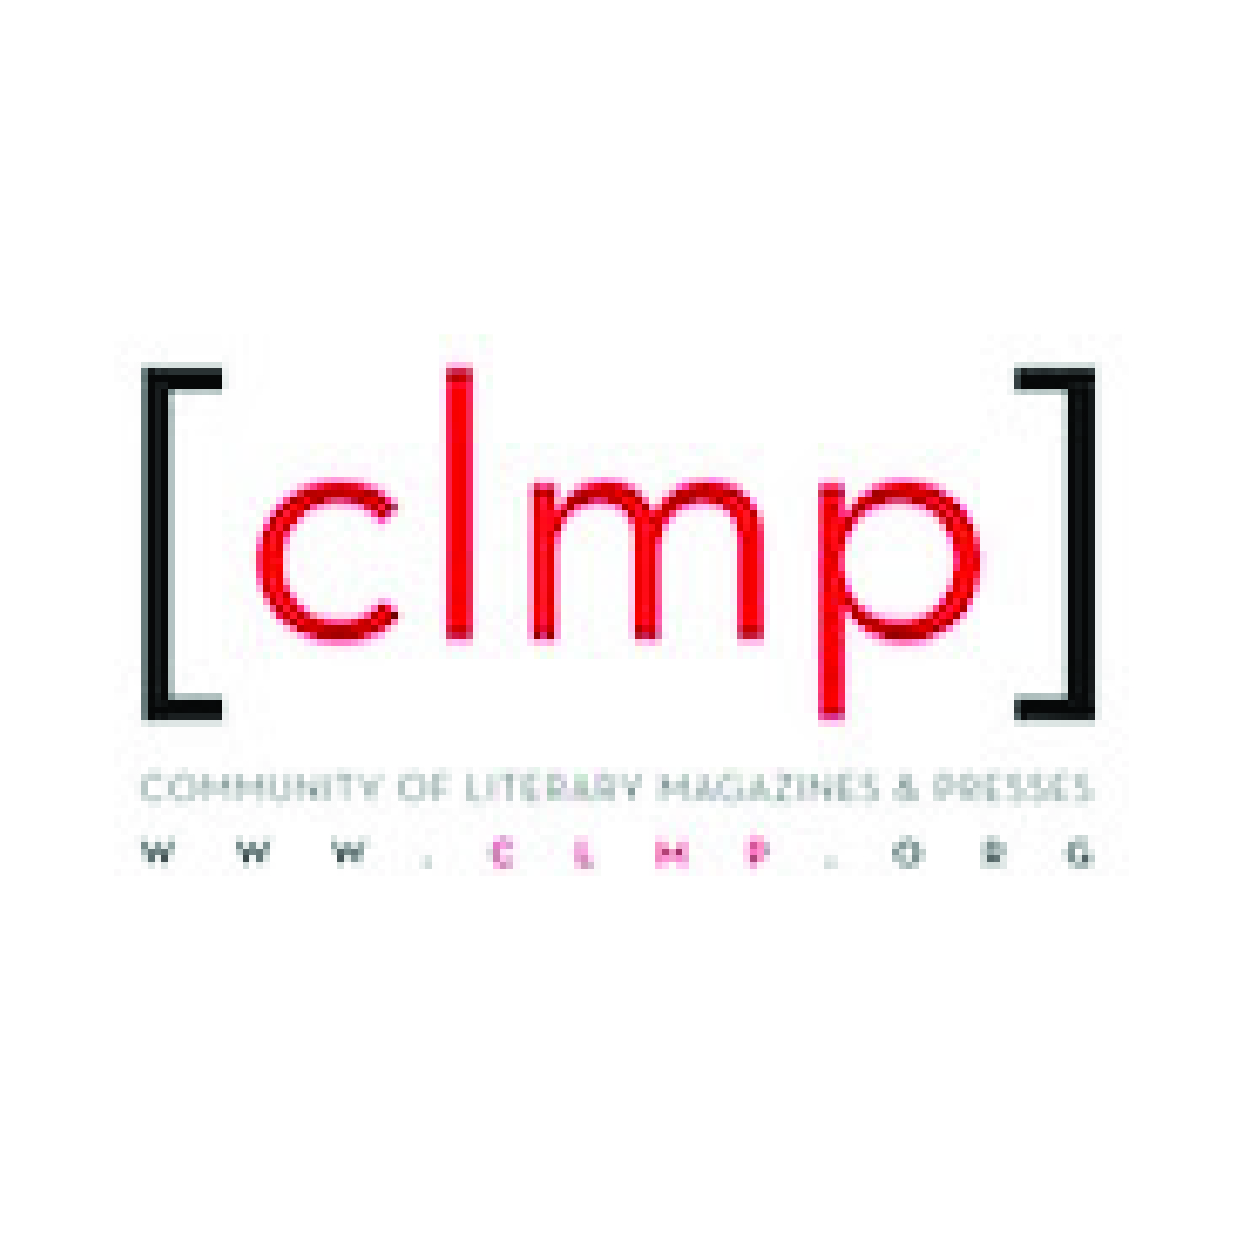 The Community of Literary Magazines & Presses